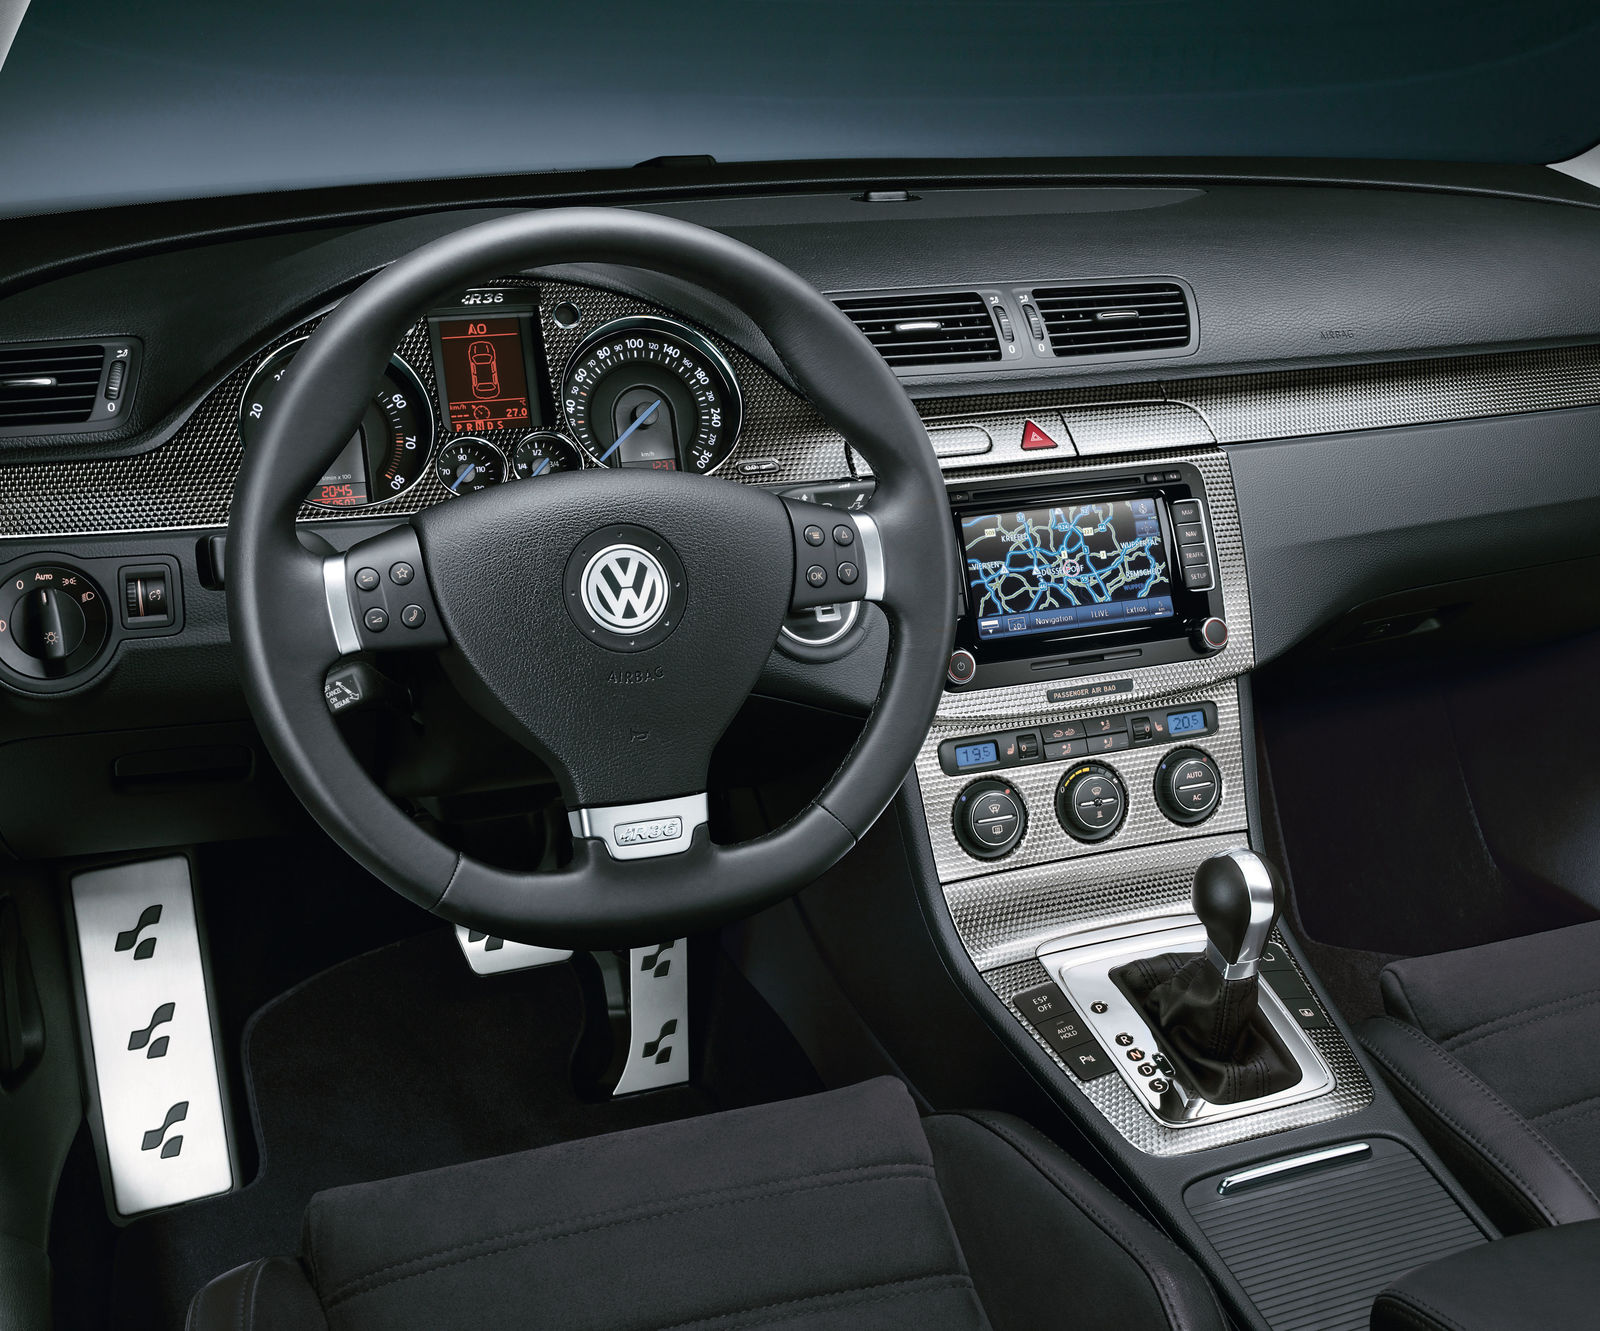 Коробки фольксваген пассат б6. Фольксваген Пассат b6 салон. B6 Фольксваген Пассат 2007. VW Passat b6 Interior. Volkswagen Passat b6 салон.